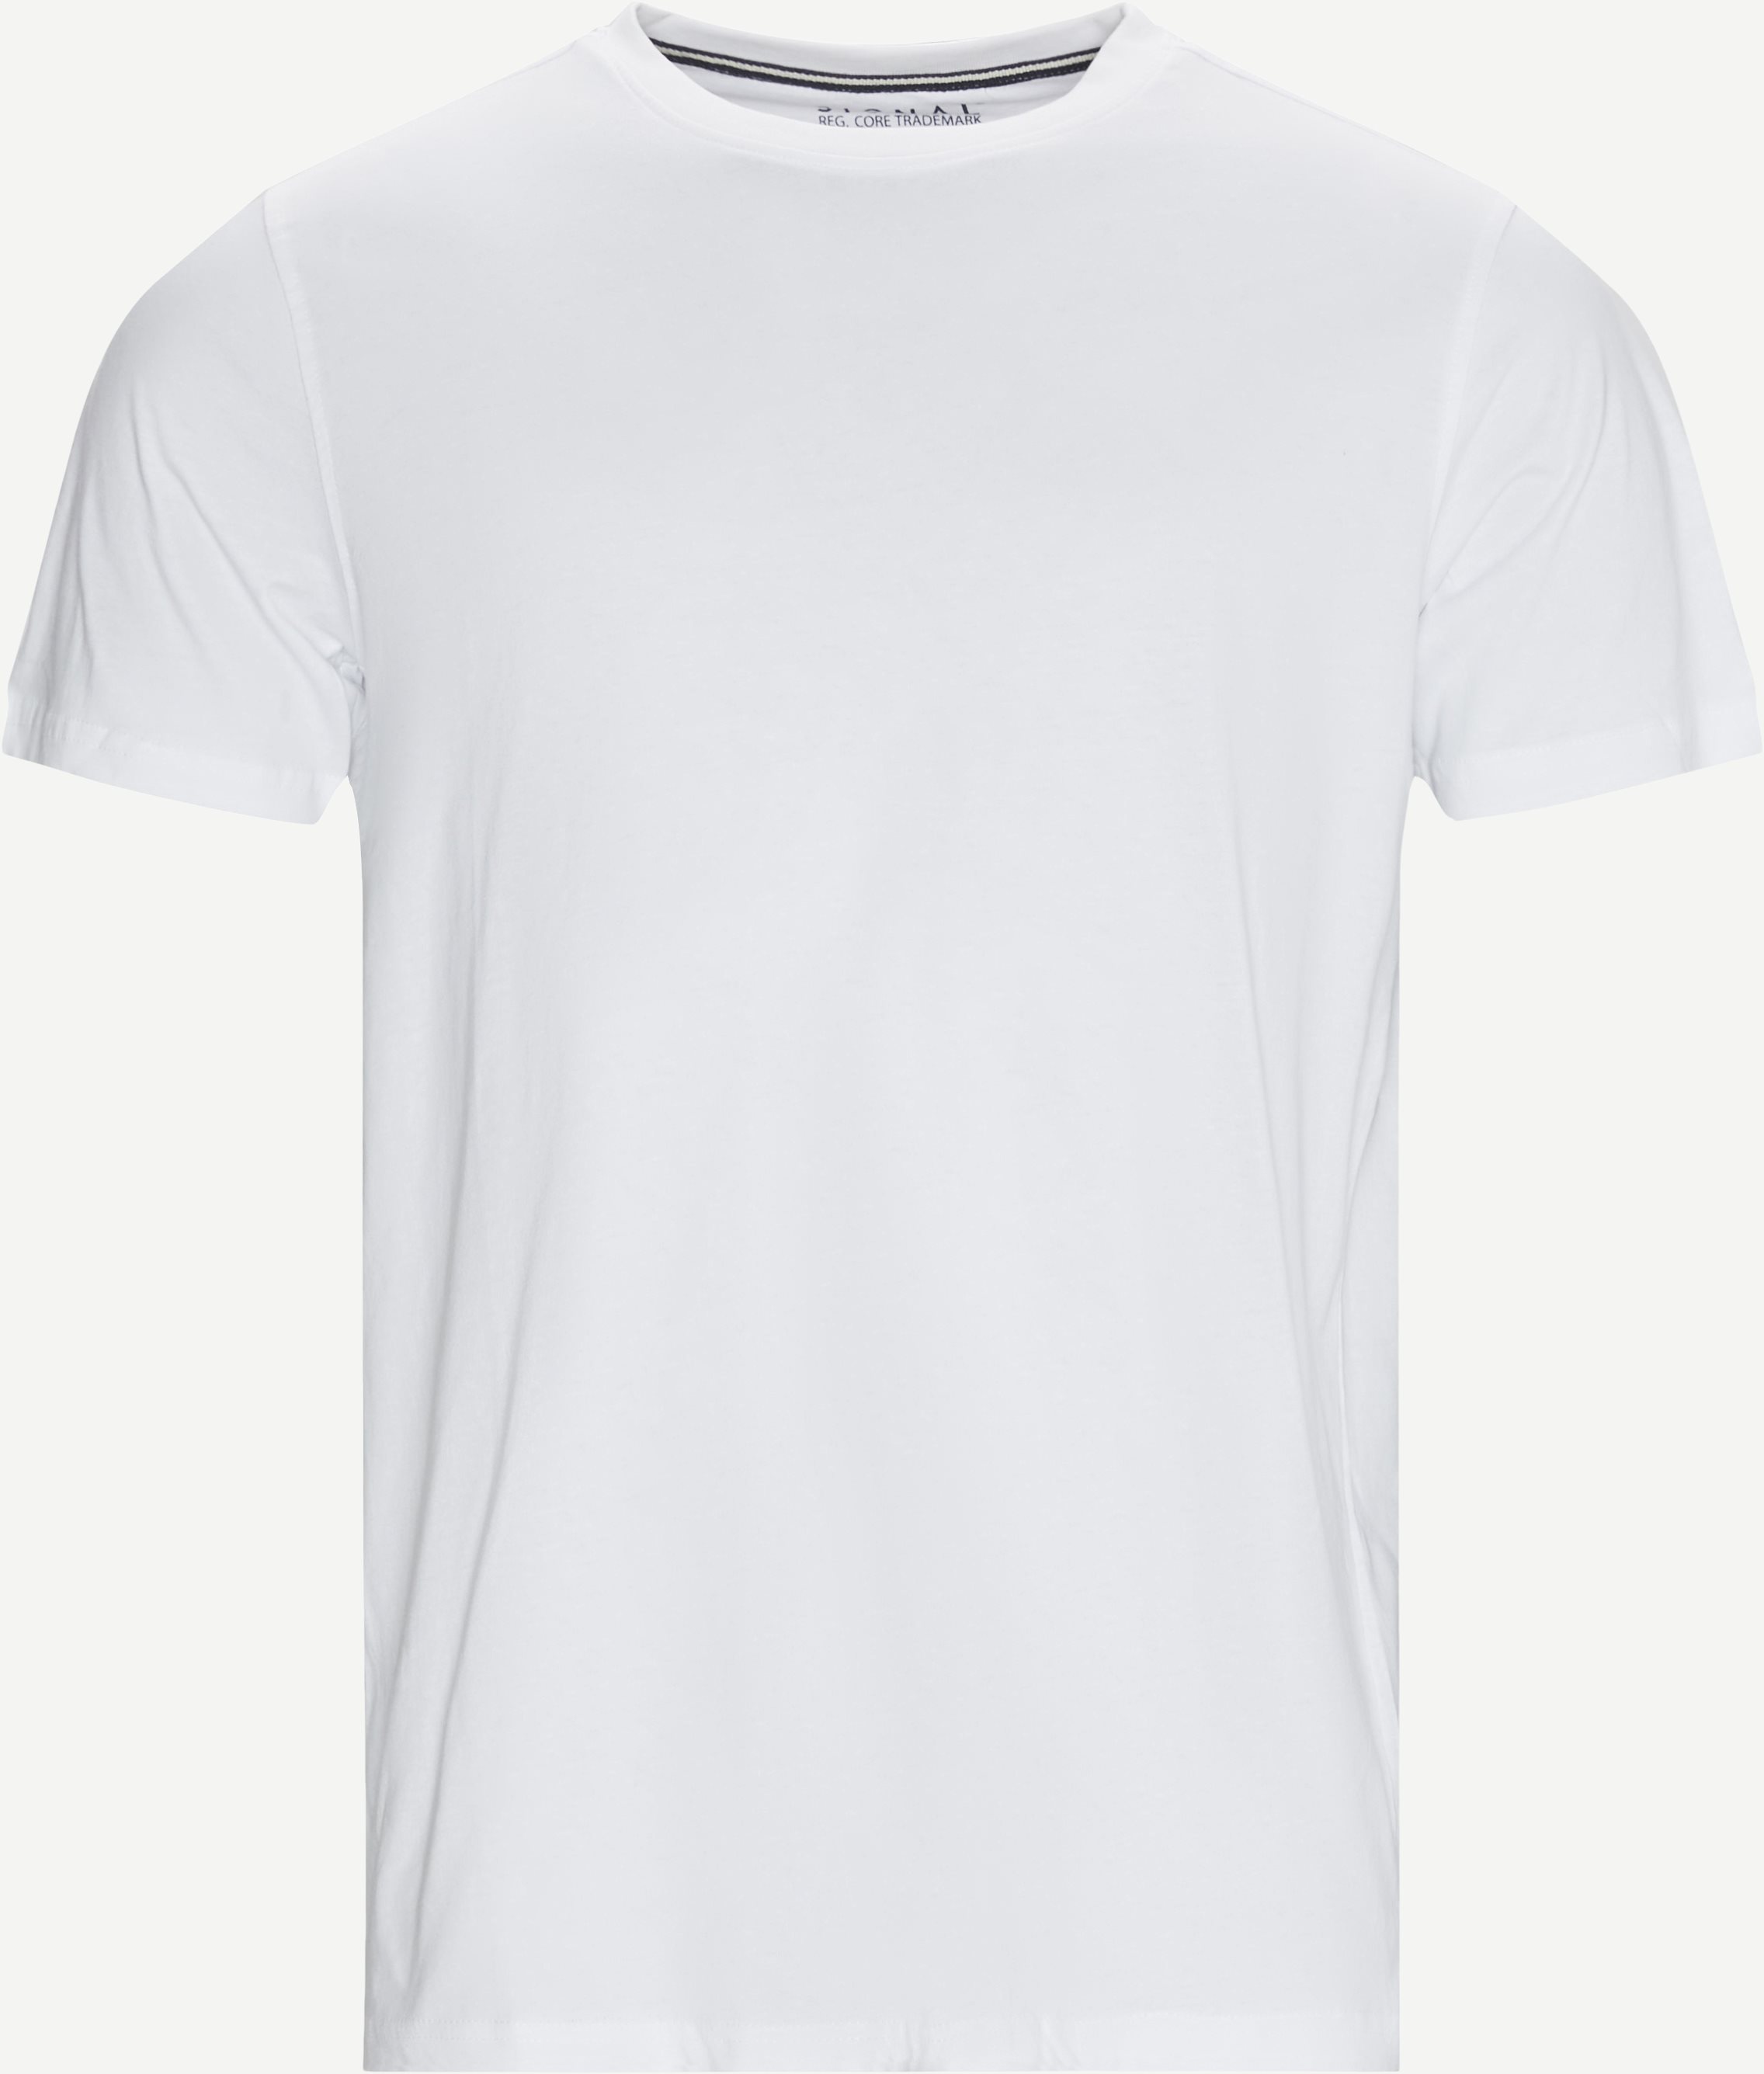 Wayne T-shirt - T-shirts - Regular fit - Hvid